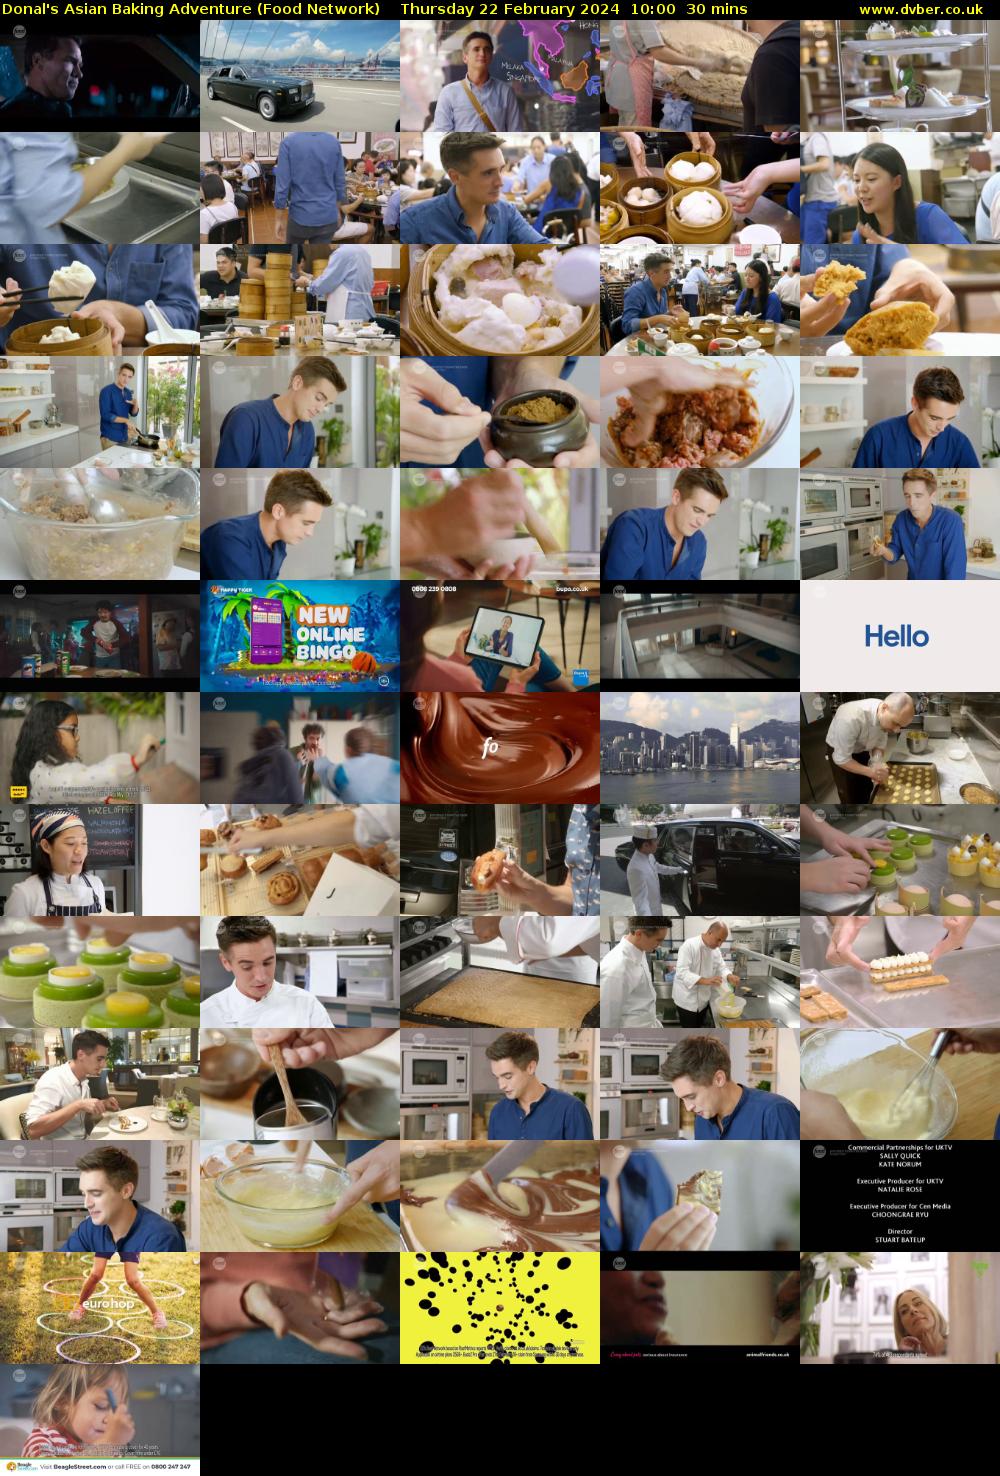 Donal's Asian Baking Adventure (Food Network) Thursday 22 February 2024 10:00 - 10:30